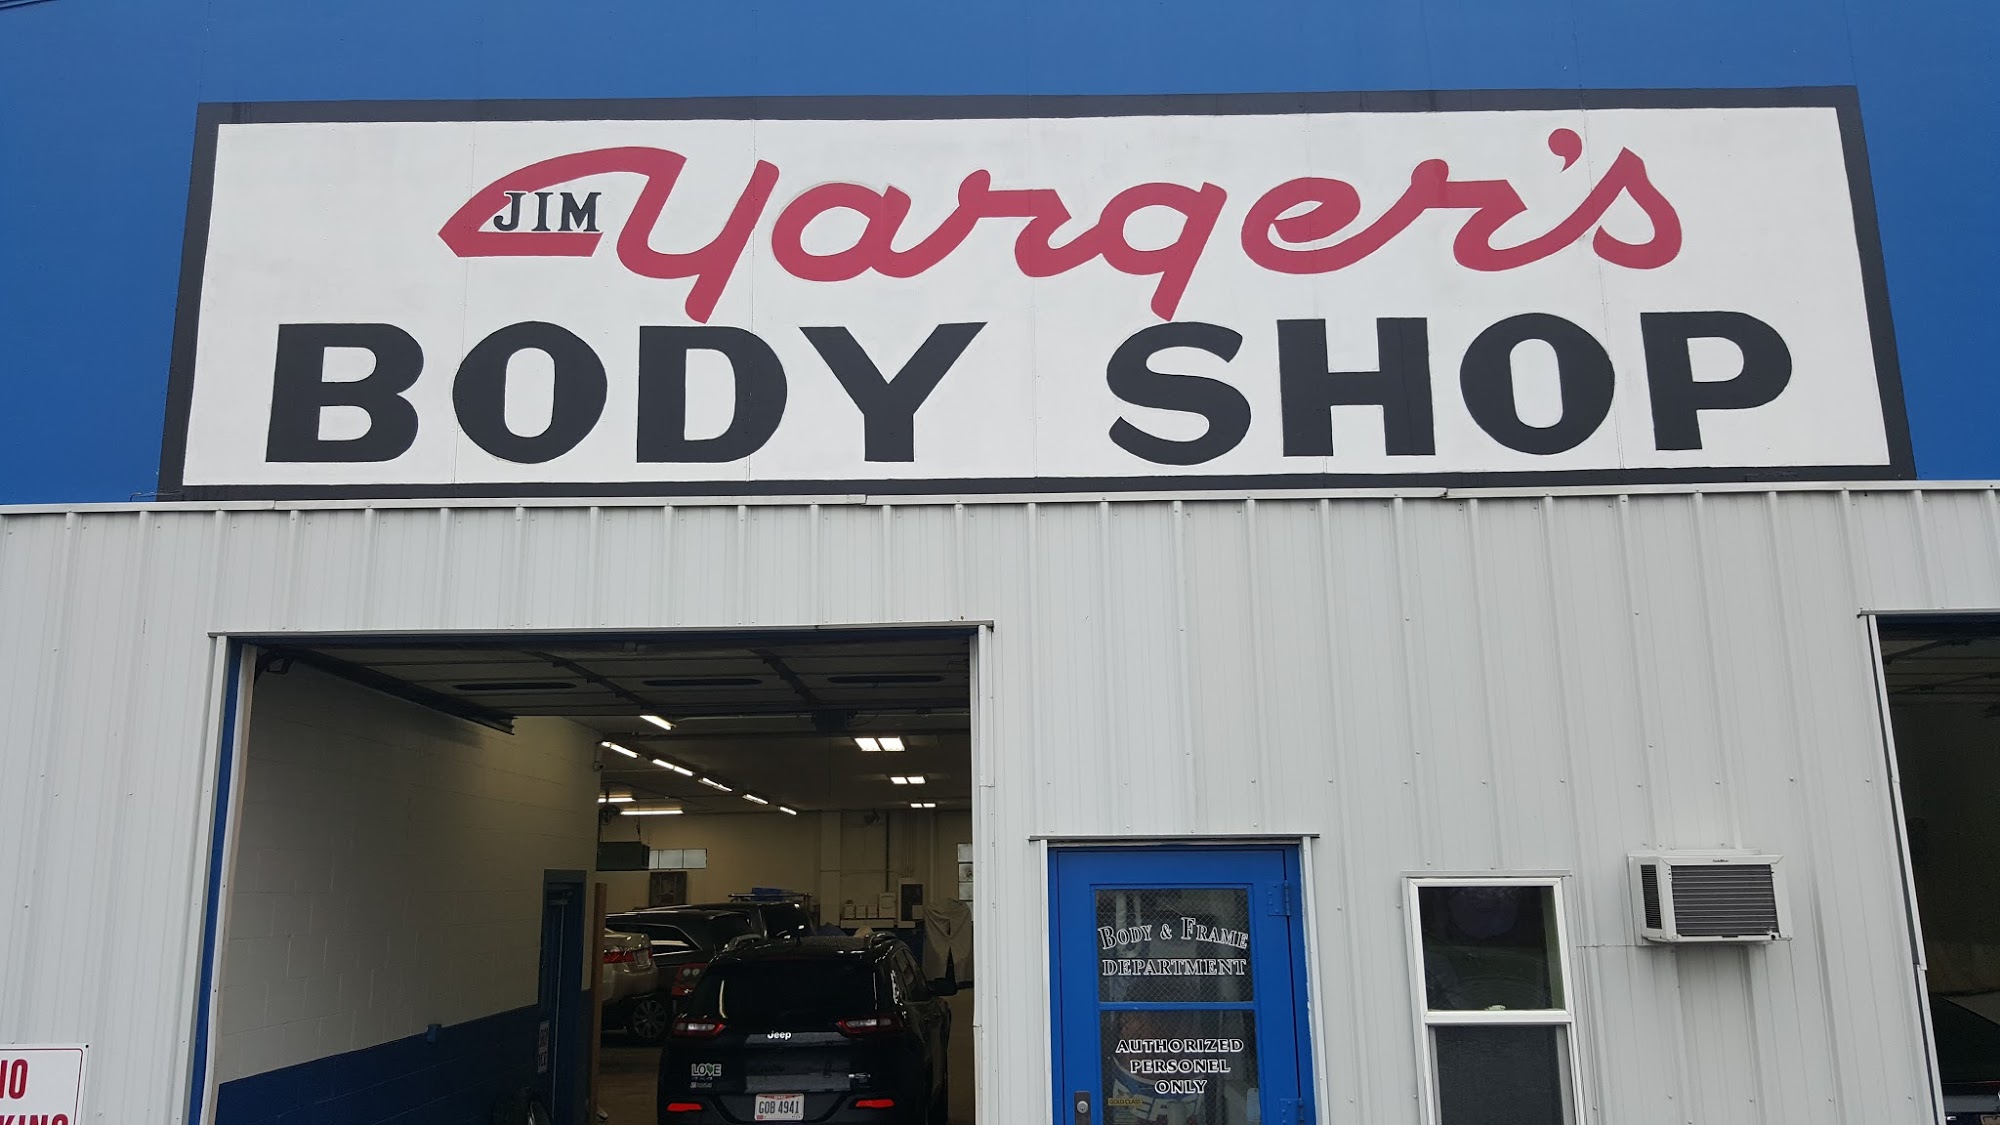 Jim Yargers Body Shop